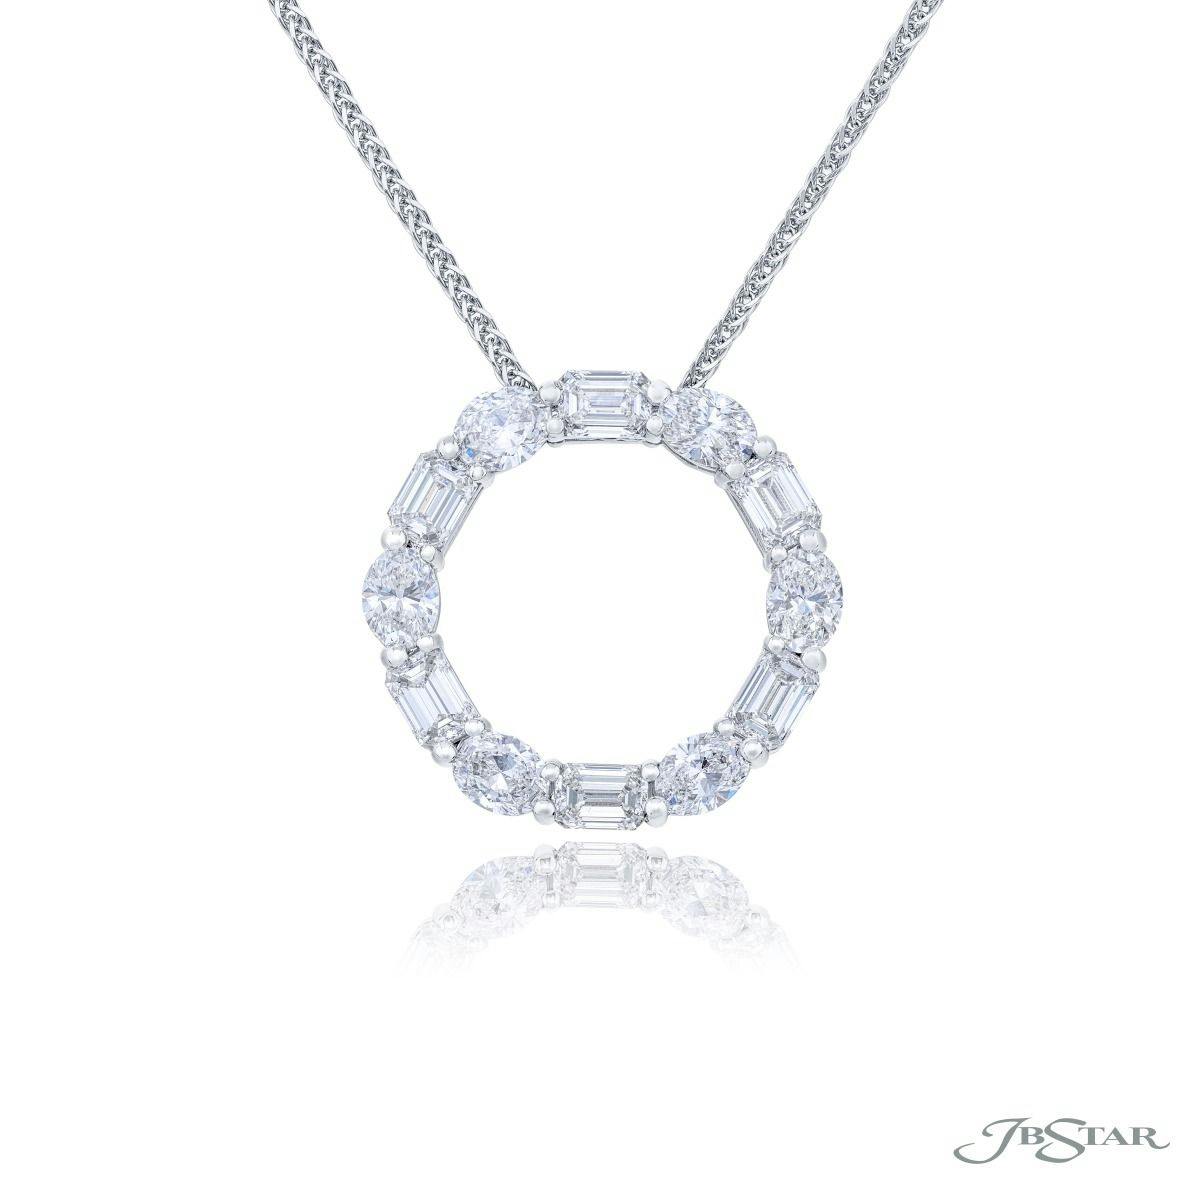 J.B. Star Platinum Diamond Circle Pendant Necklace